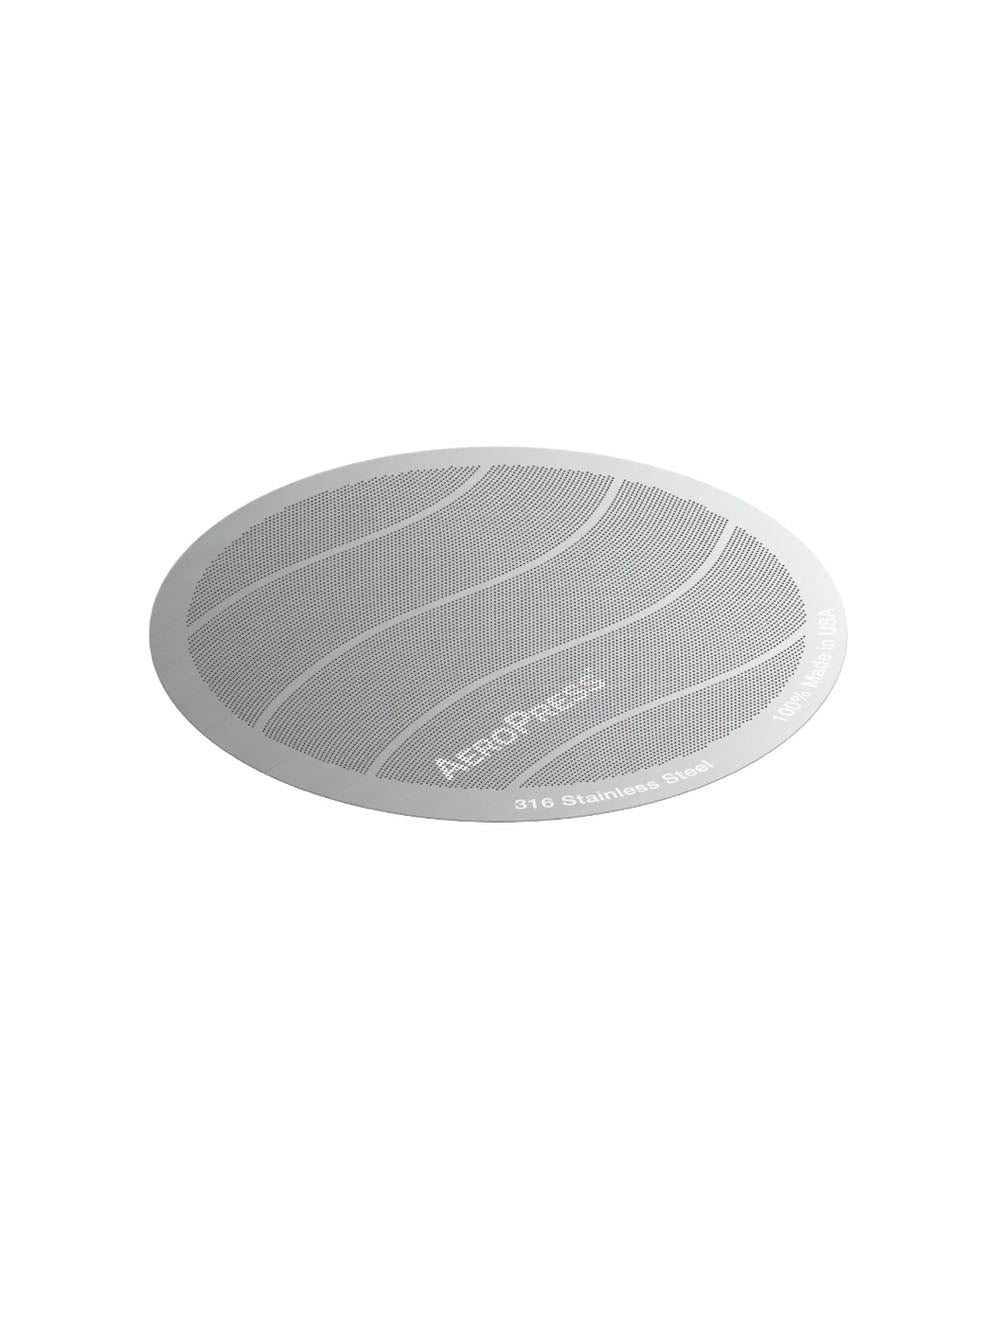 AeroPress Stainless Steel Reusable Filter - Image 4